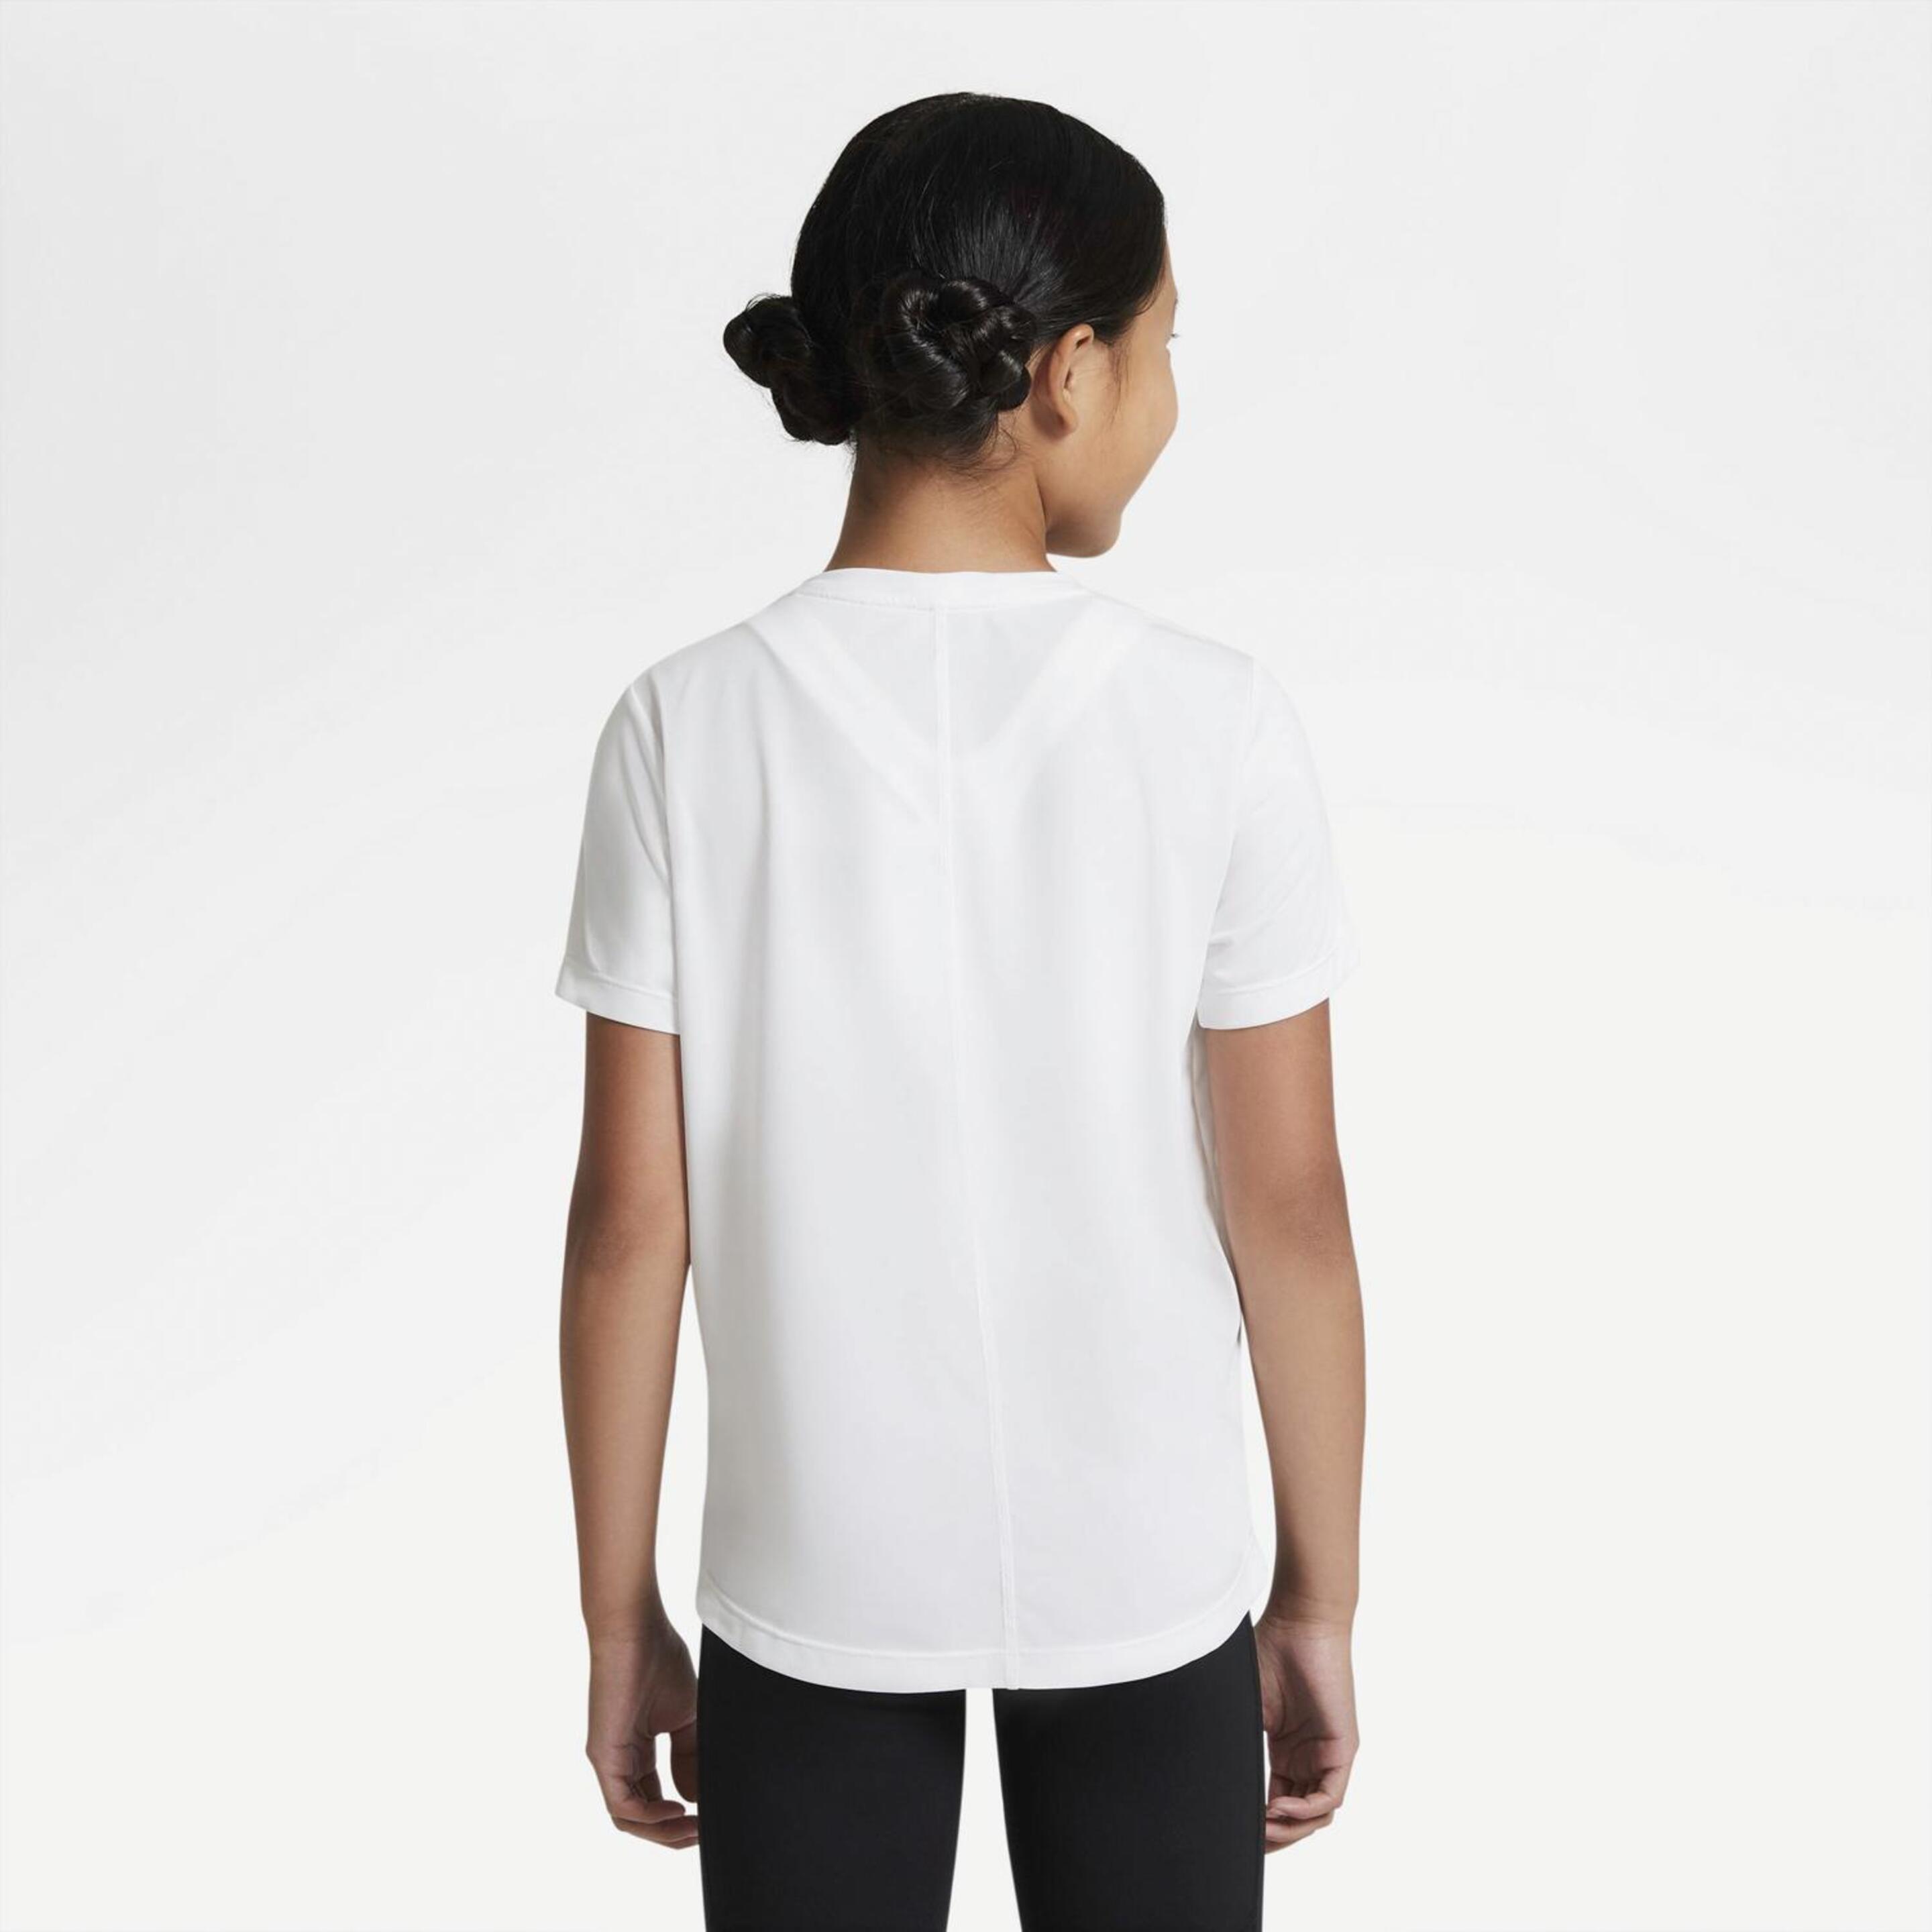 Nike One - Blanco - Camiseta Fitness Chica